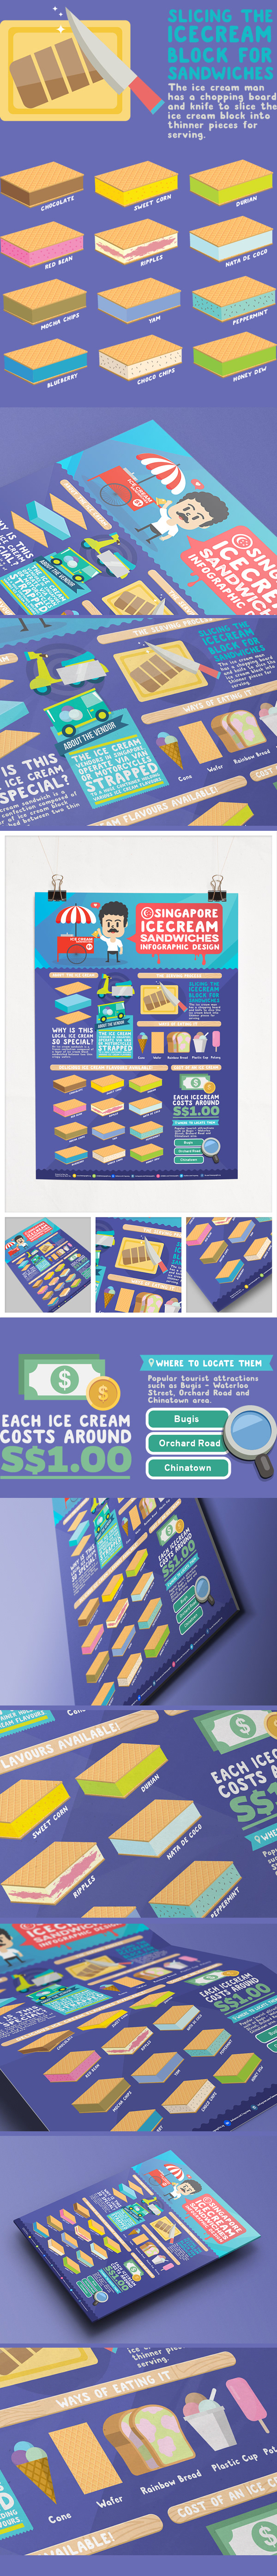 icecream ice cream ice cream Sandwiches singapore sg Ice Cream Infographic icecream information design singapore infographic